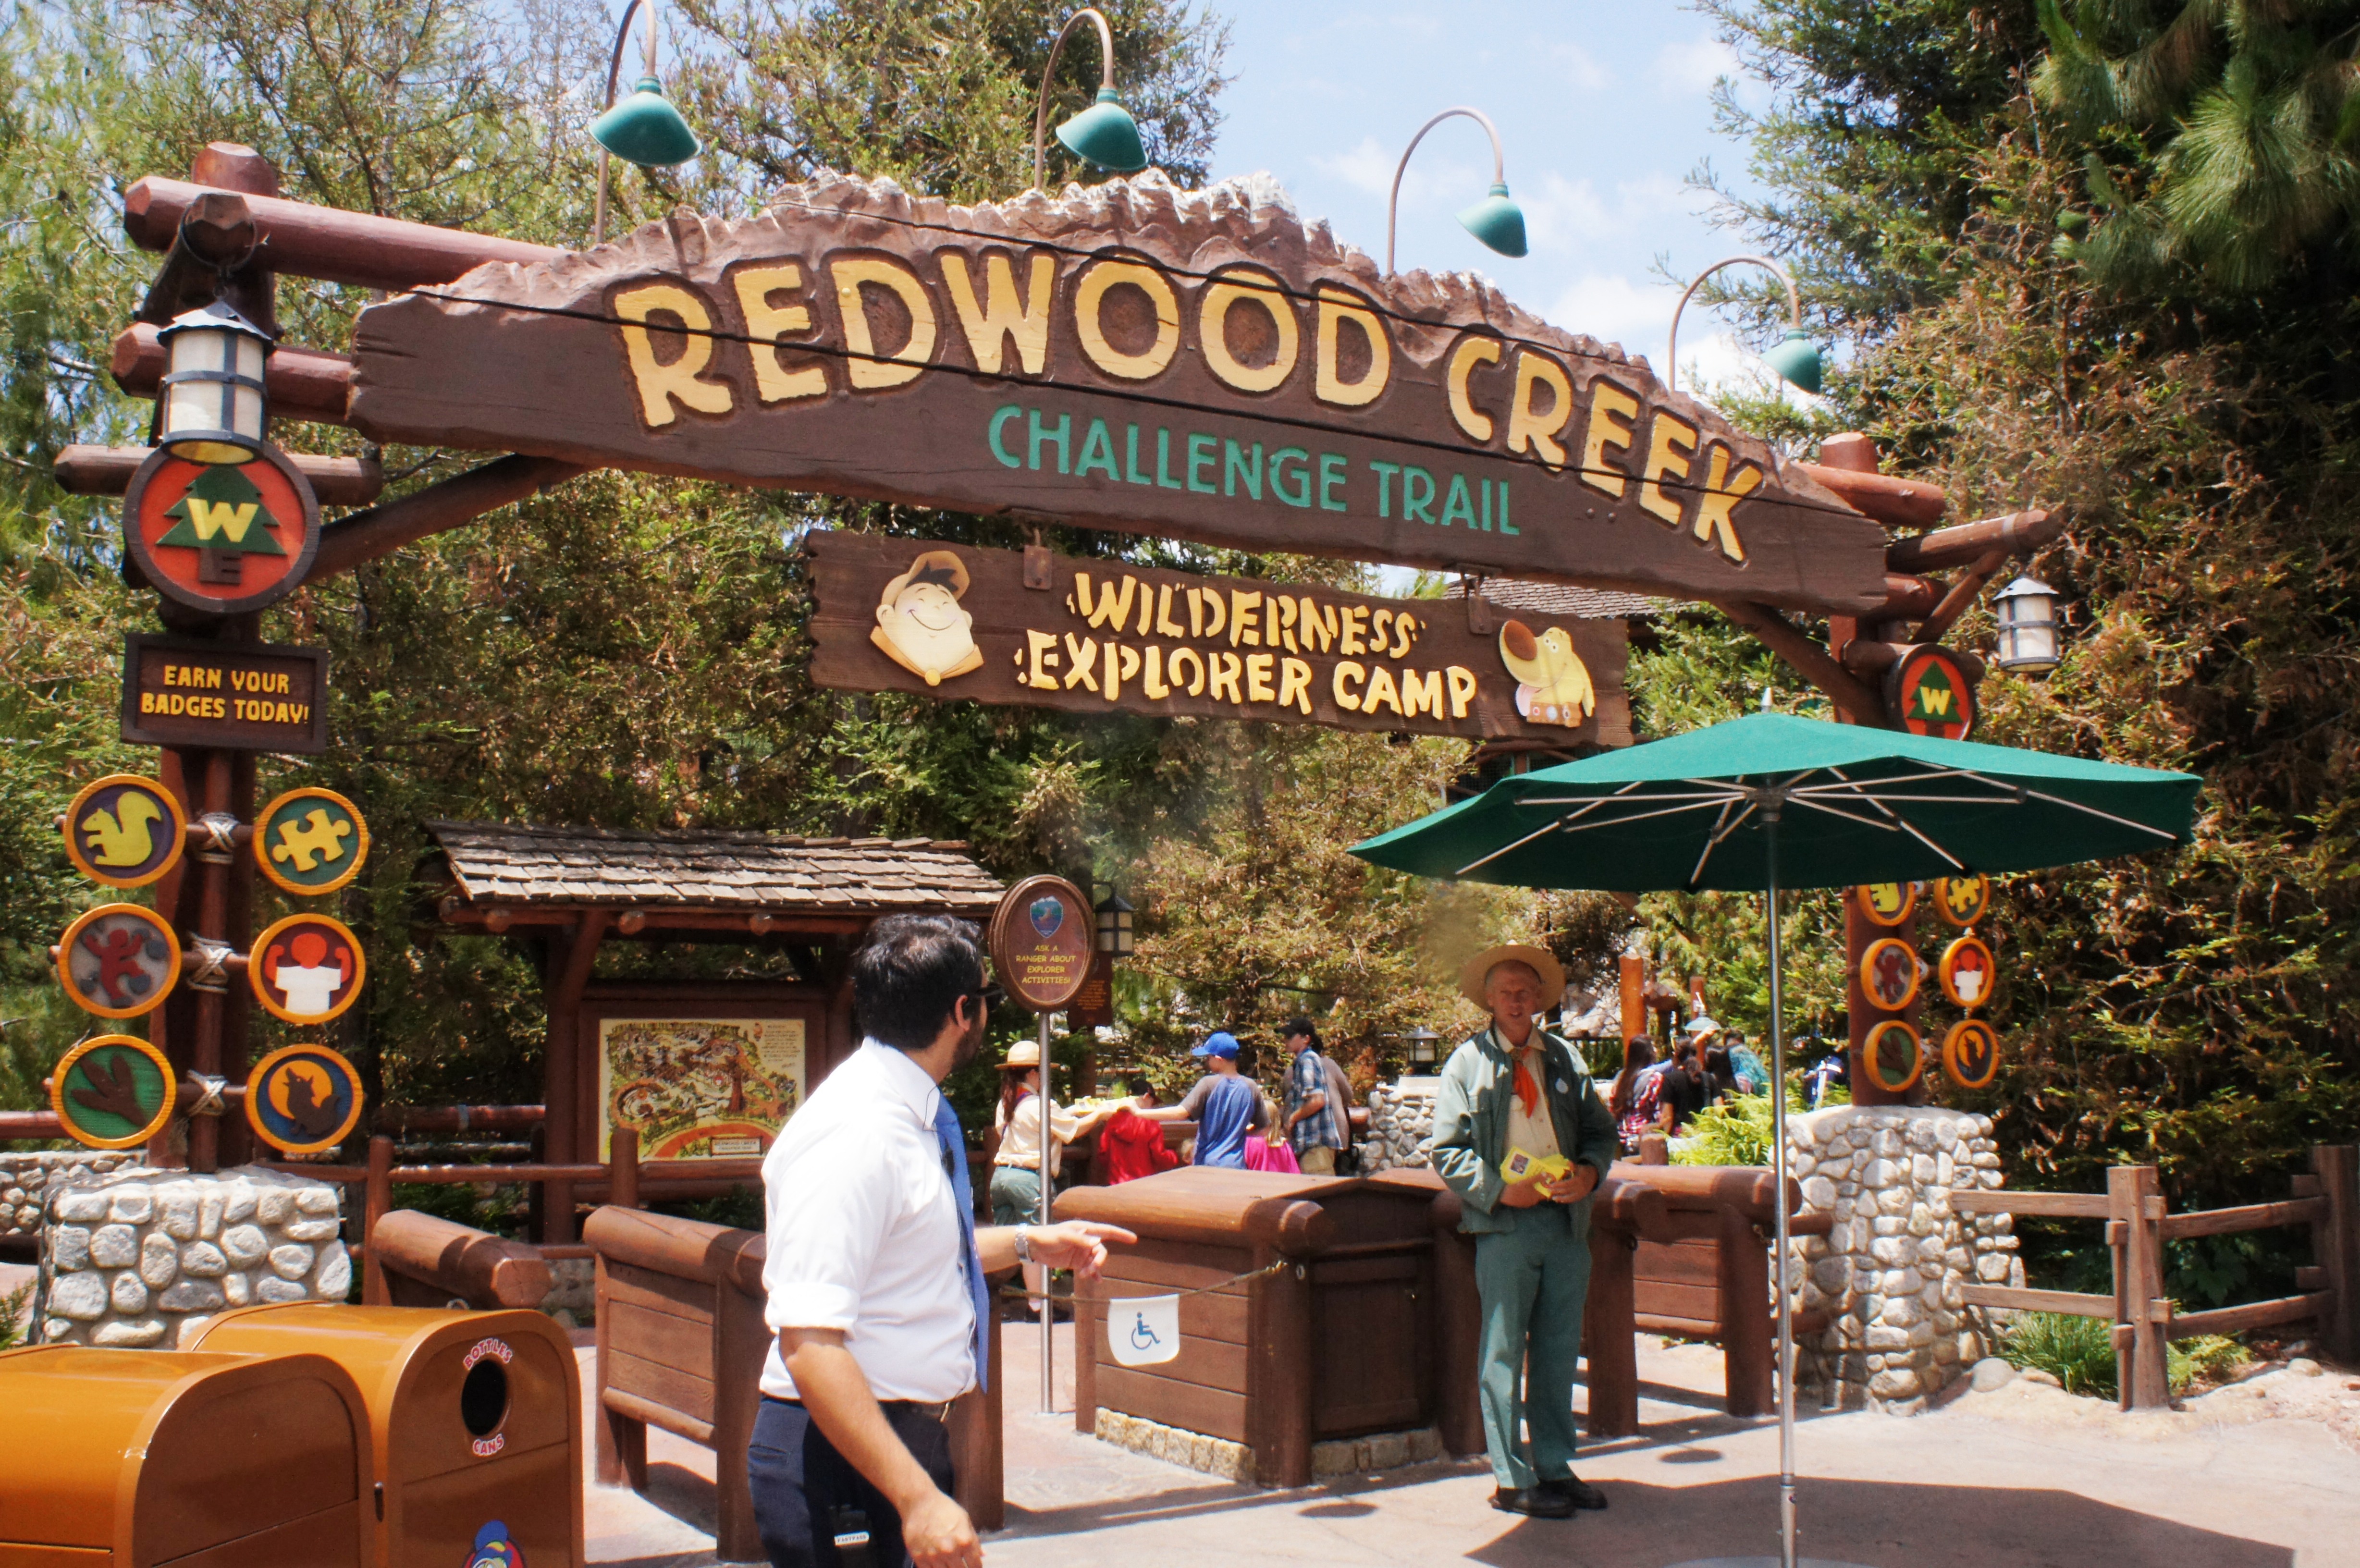 Redwood Creek Challenge Trail, Disney Wiki